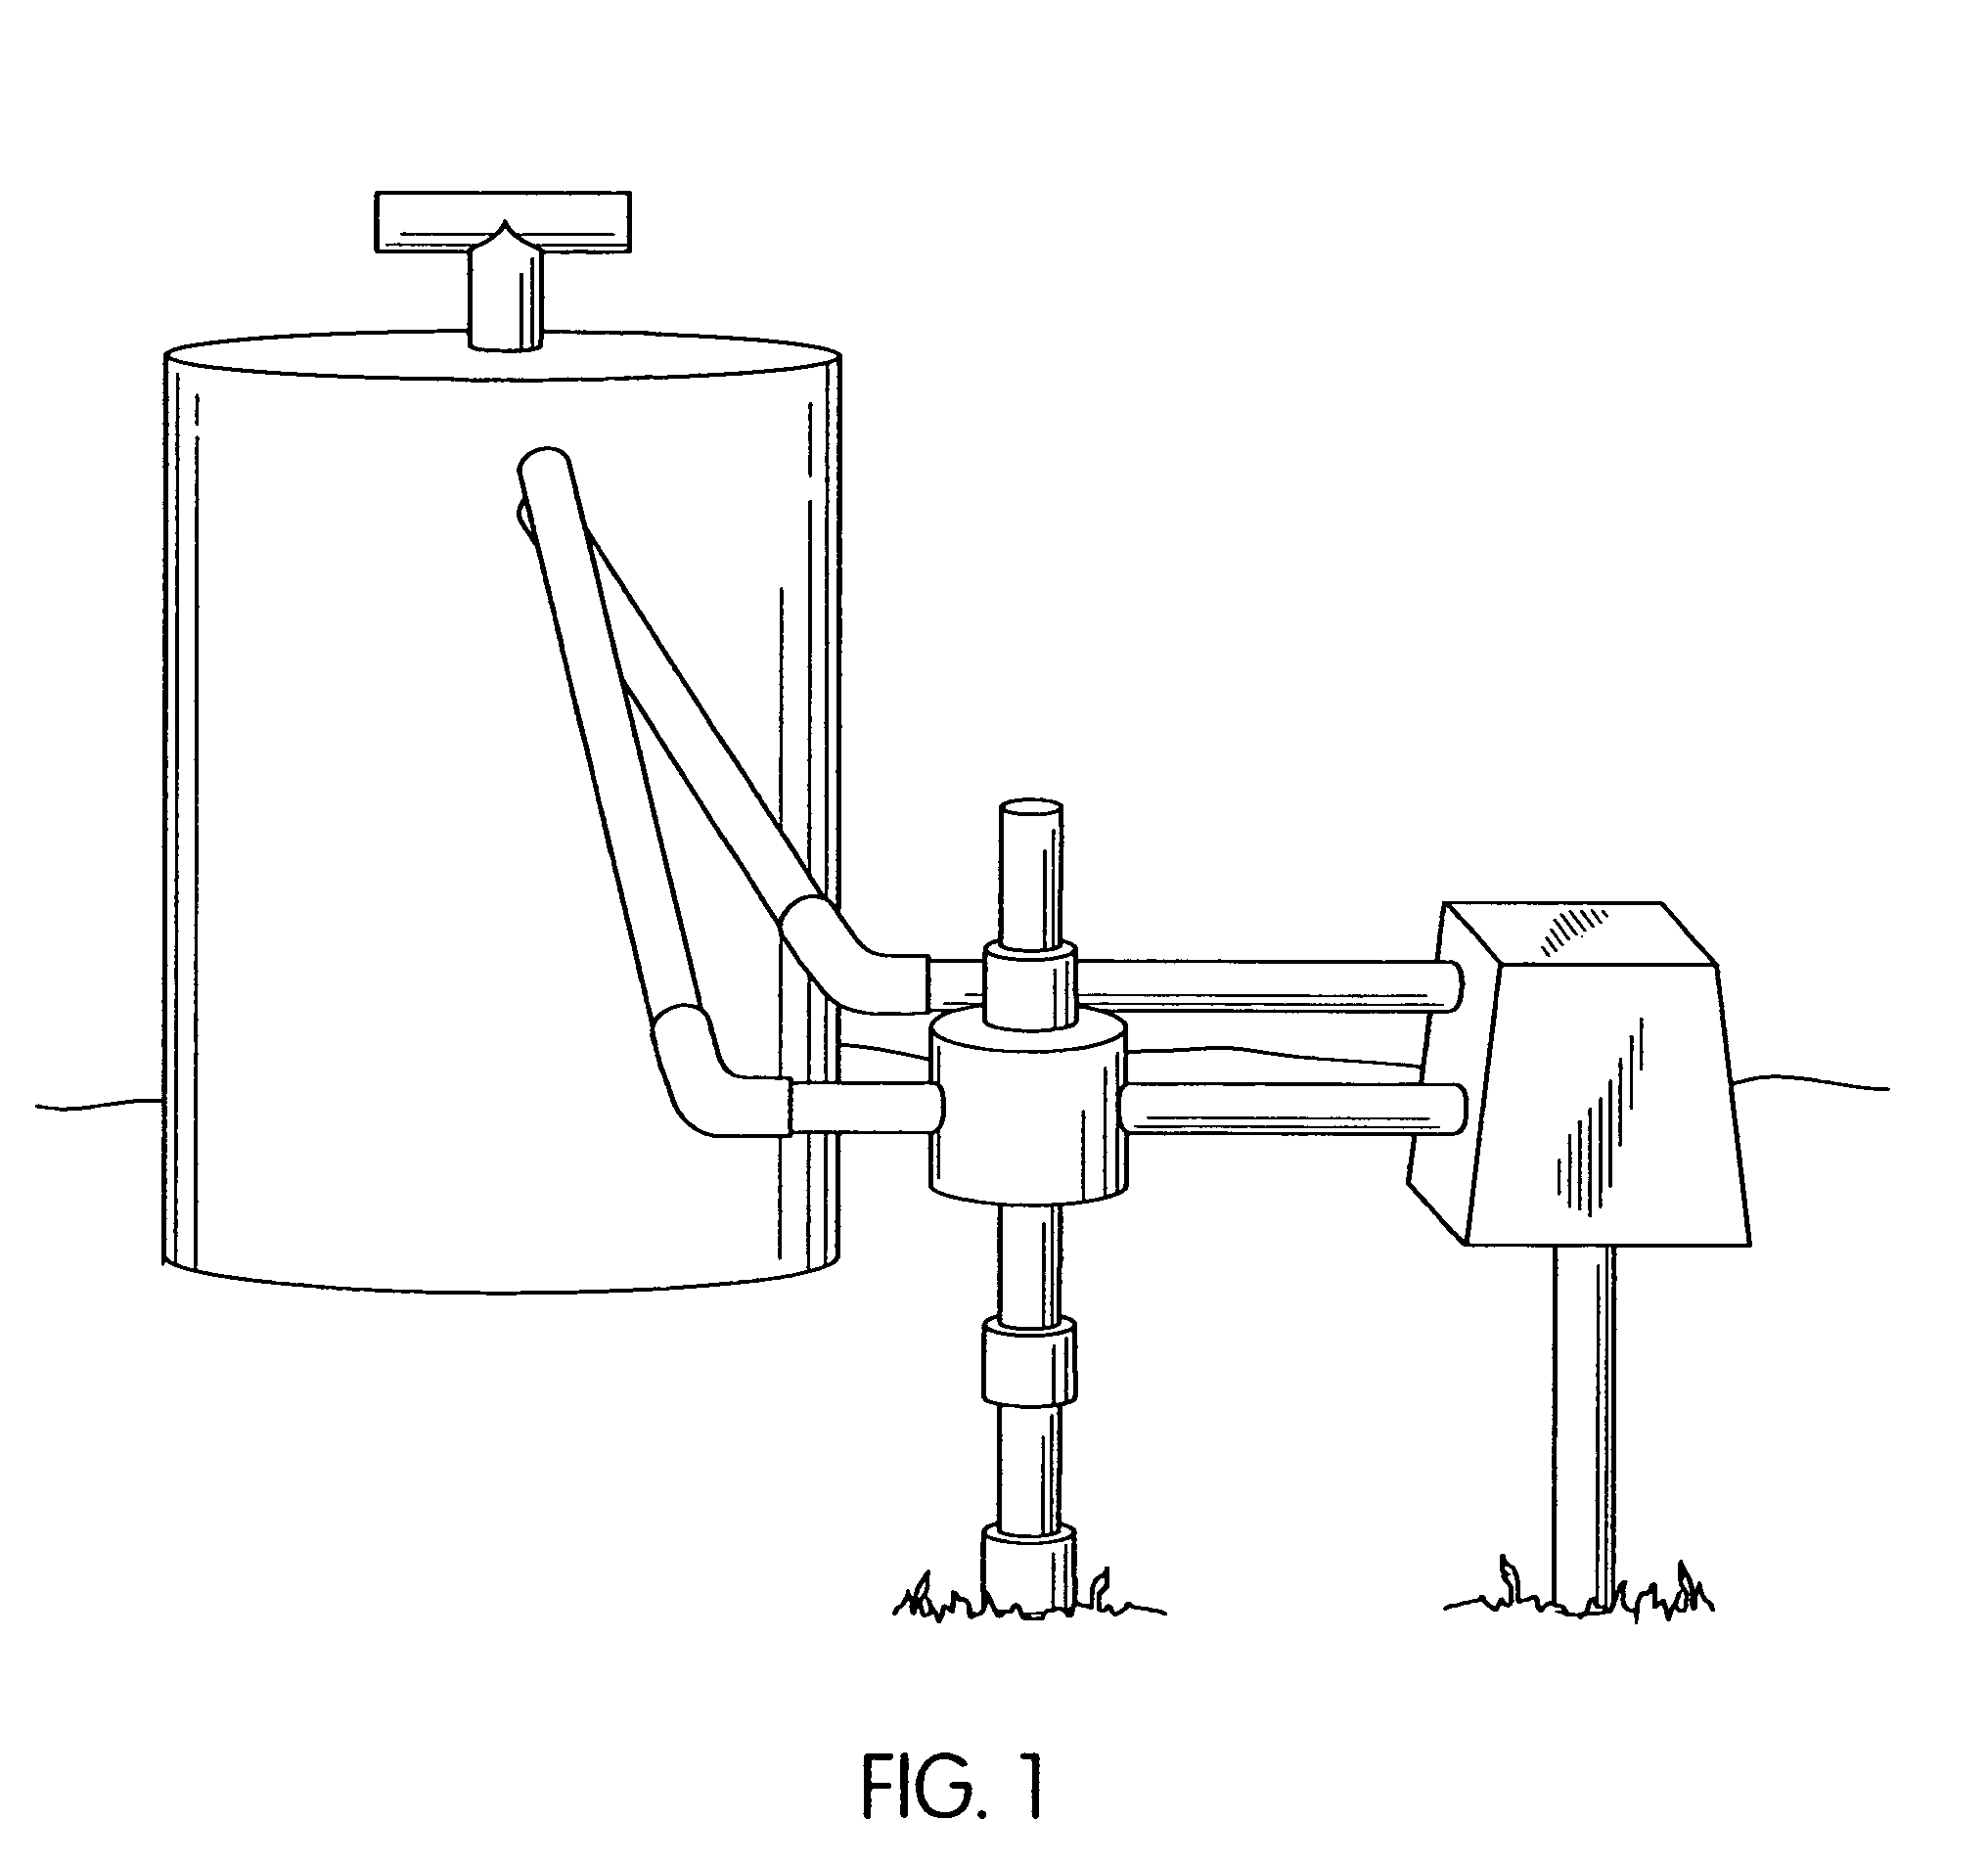 Portable brine evaporator unit, process, and system